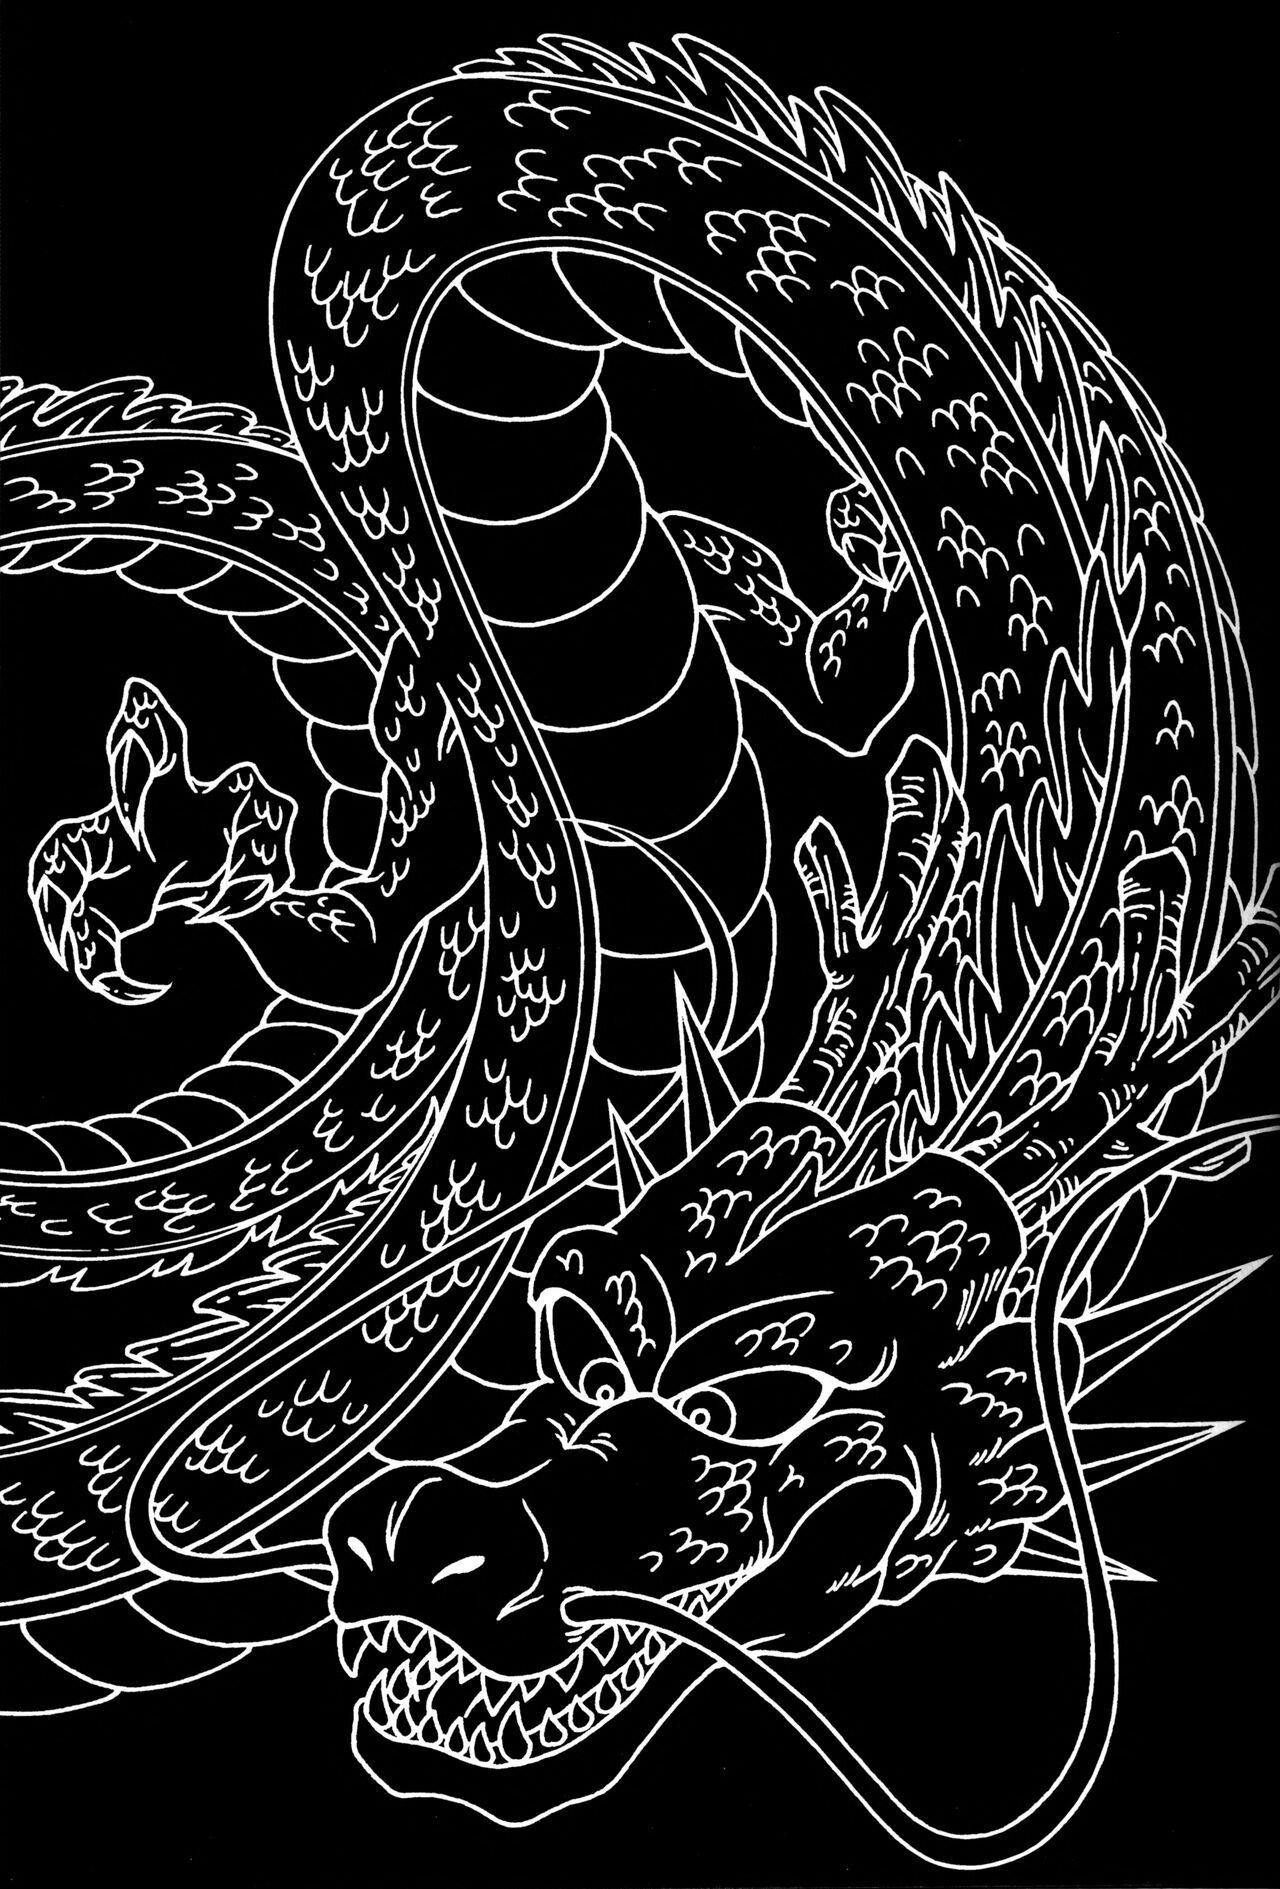 Olderwoman Dragonball Fan Book SPECIAL - Dragon ball z Cdmx - Page 2